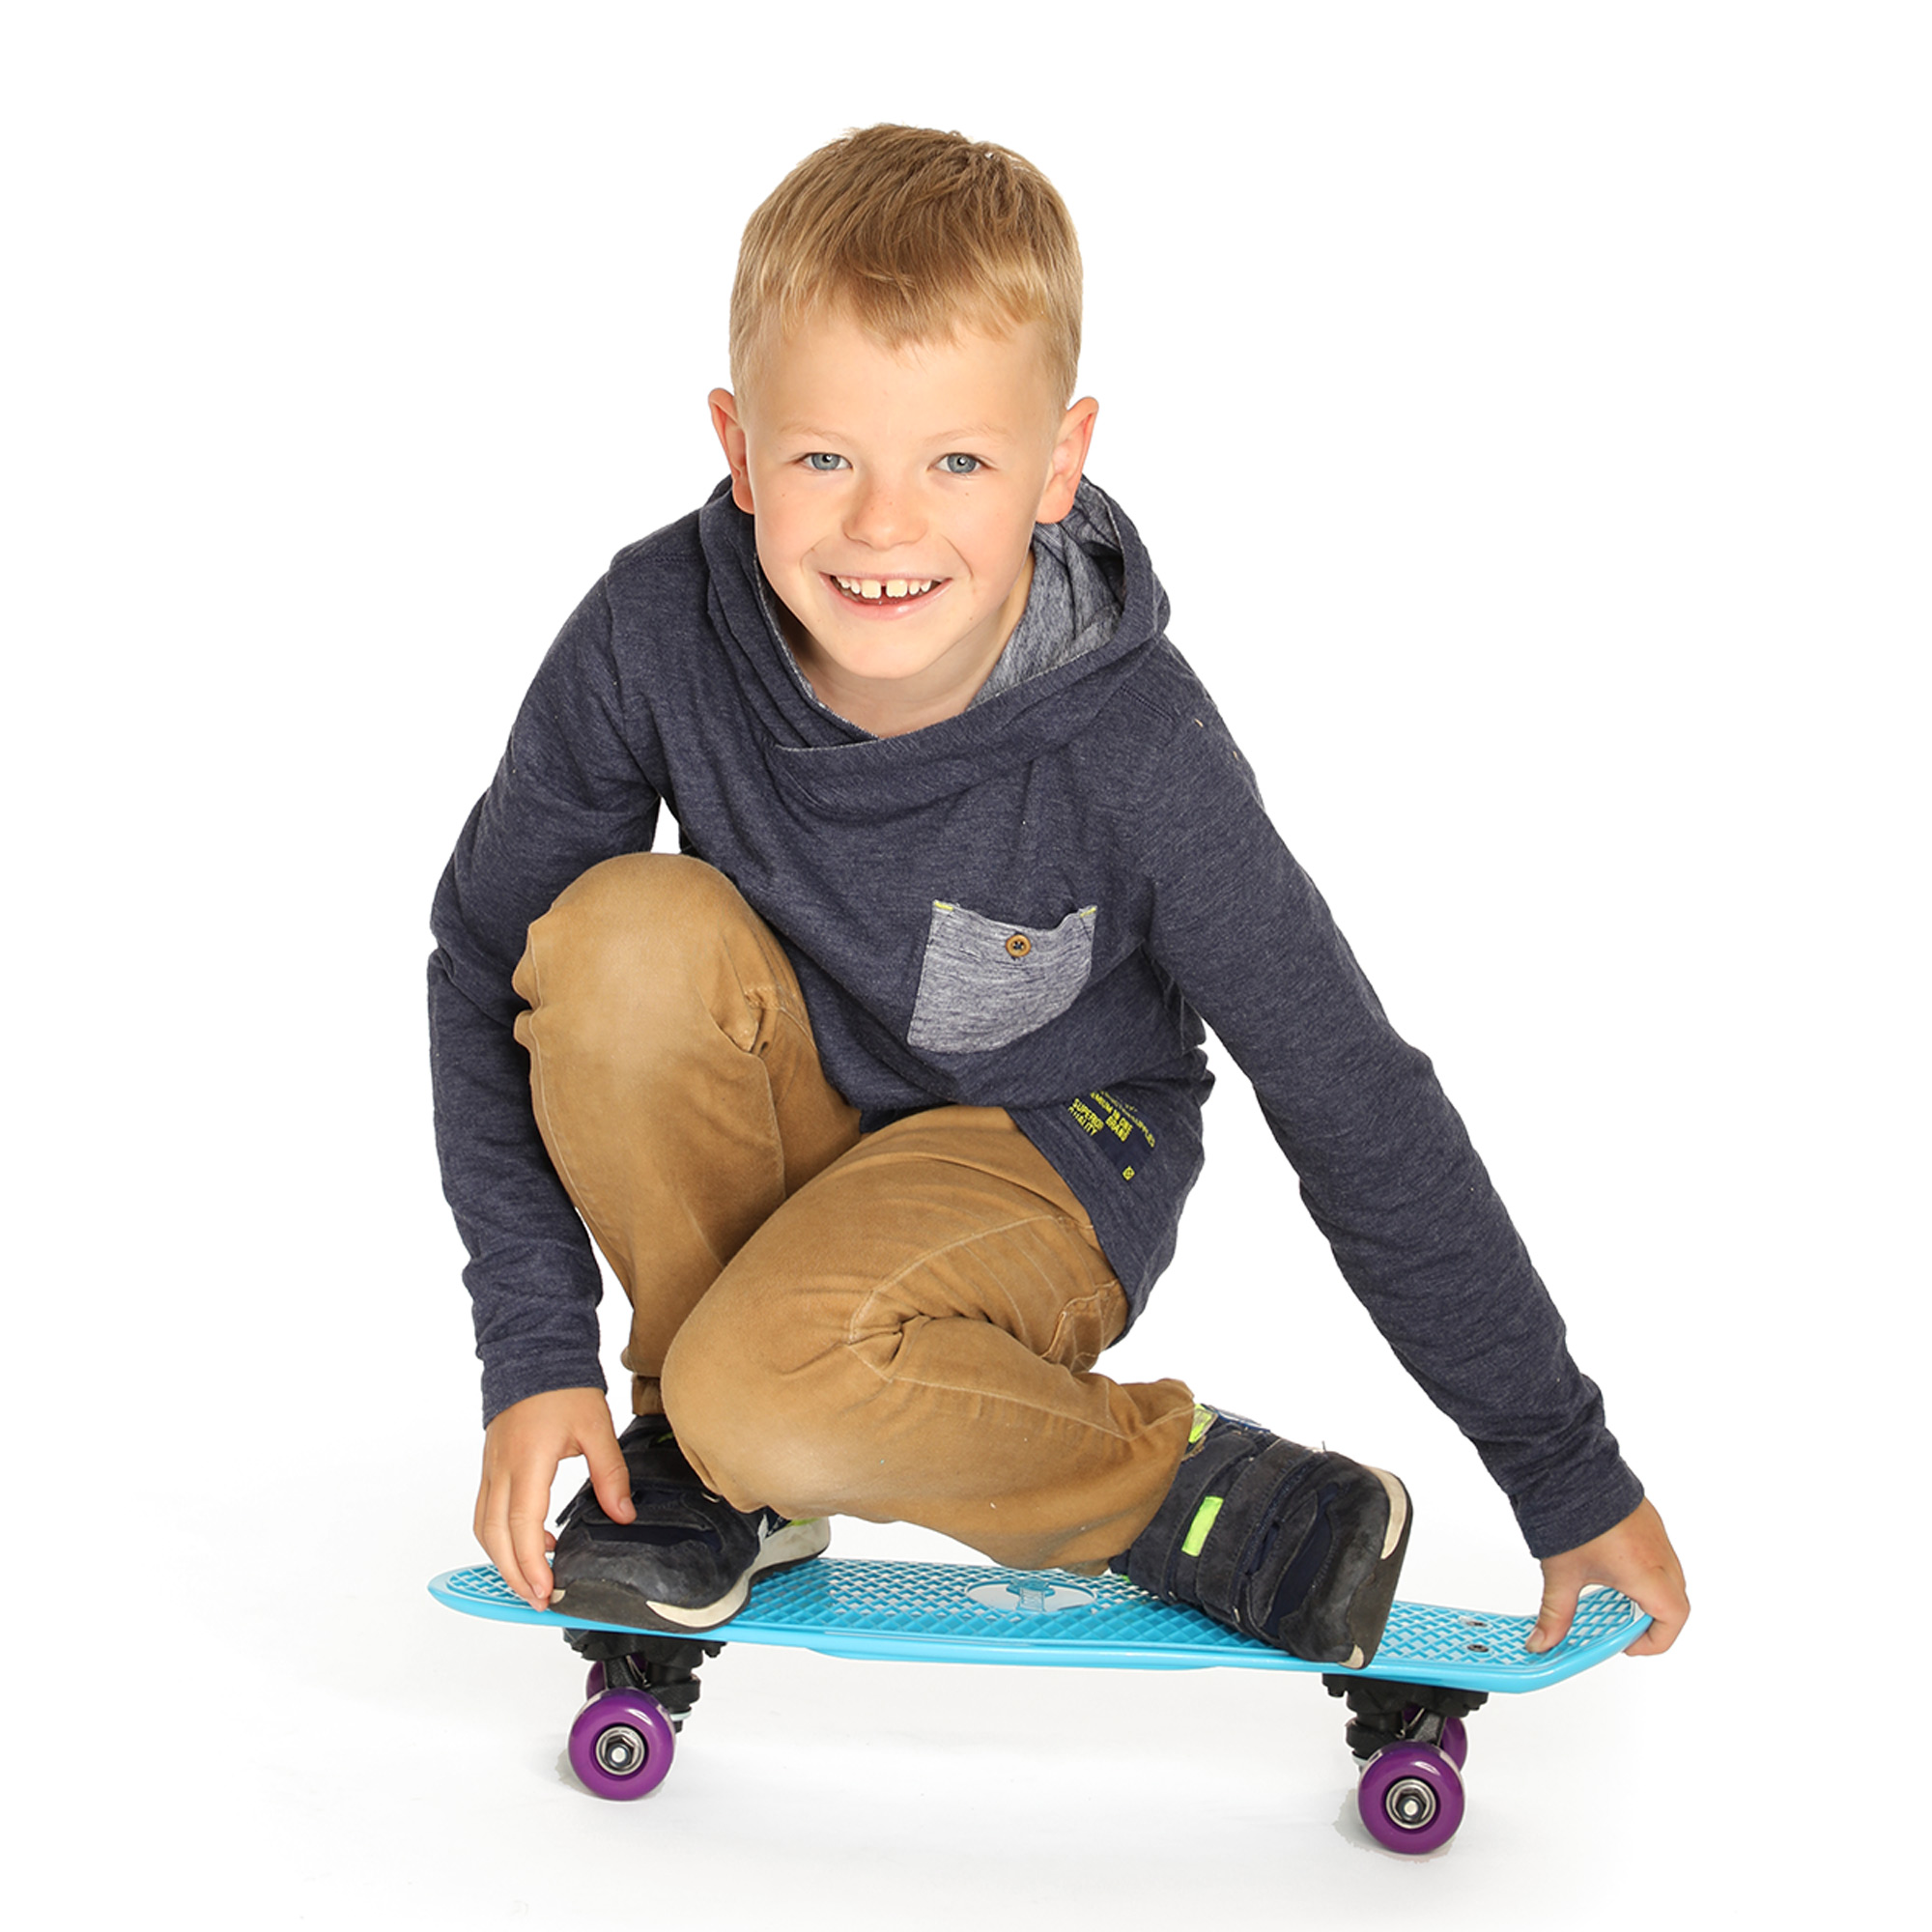 Skateboard Blau, 55cm